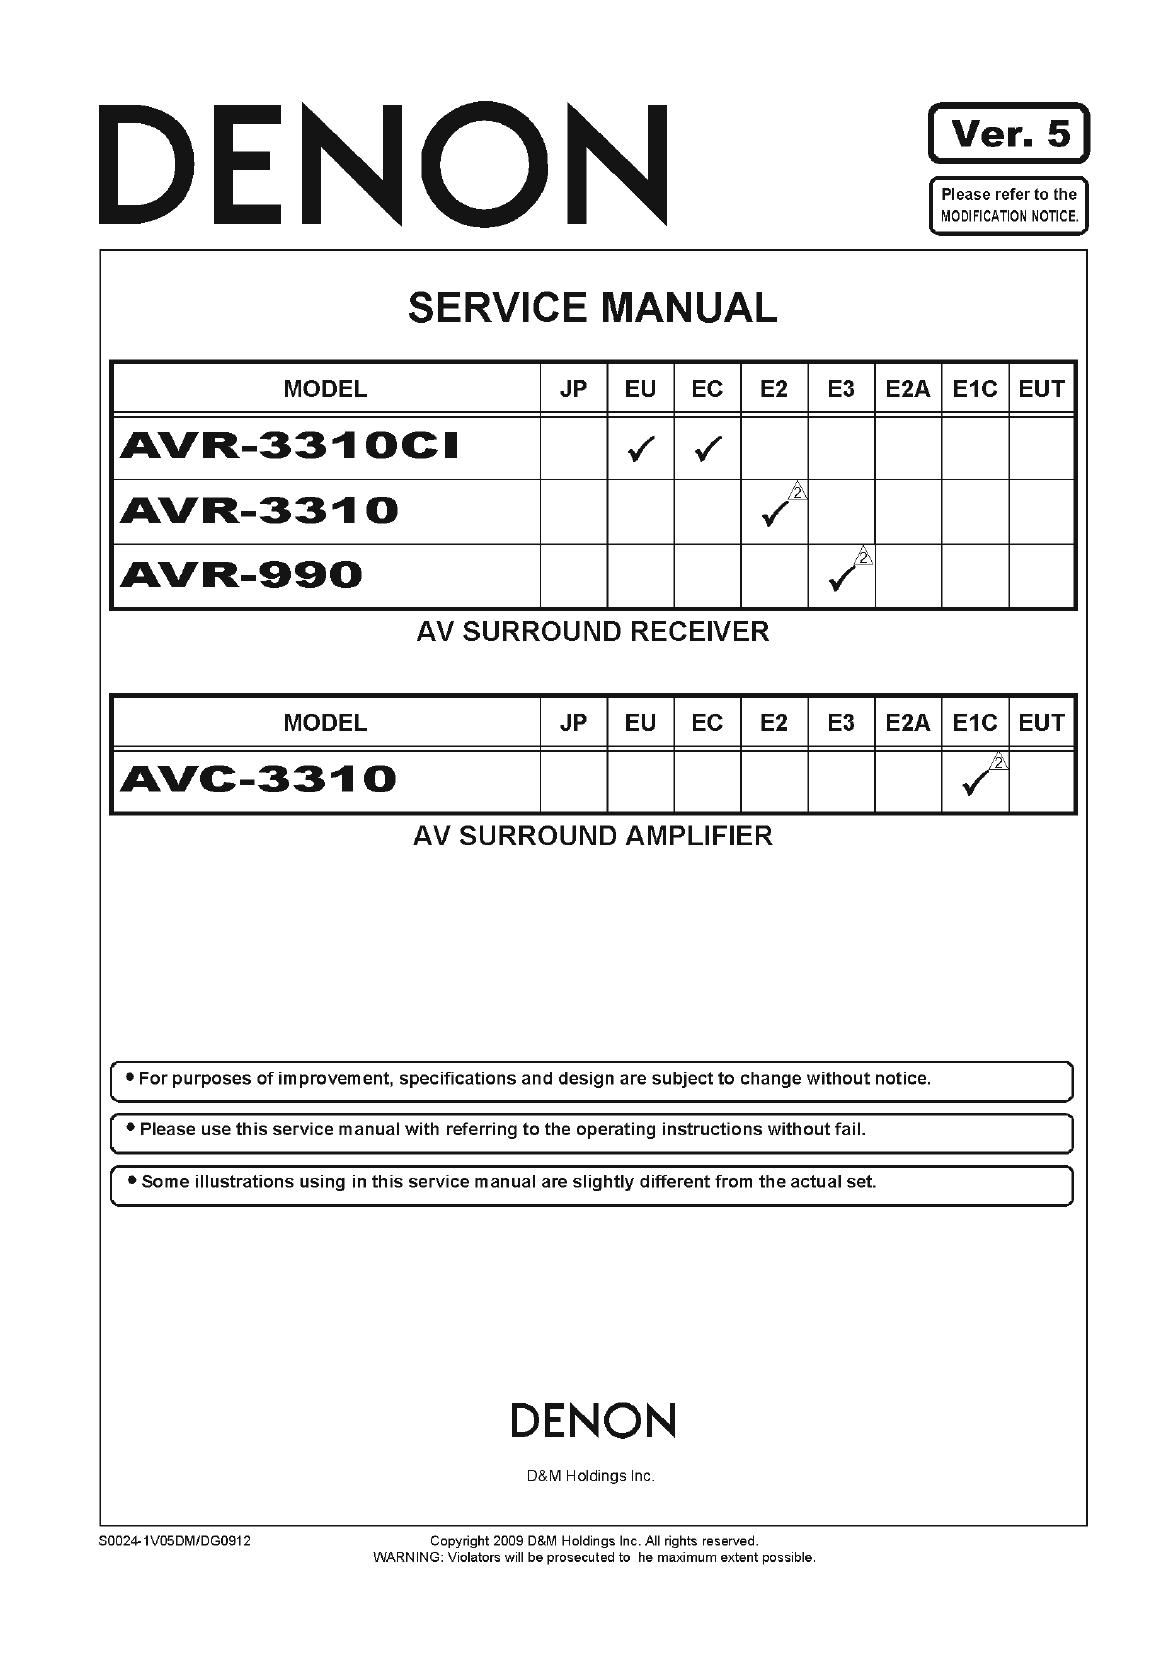 Denon AVC 3310 Service Manual